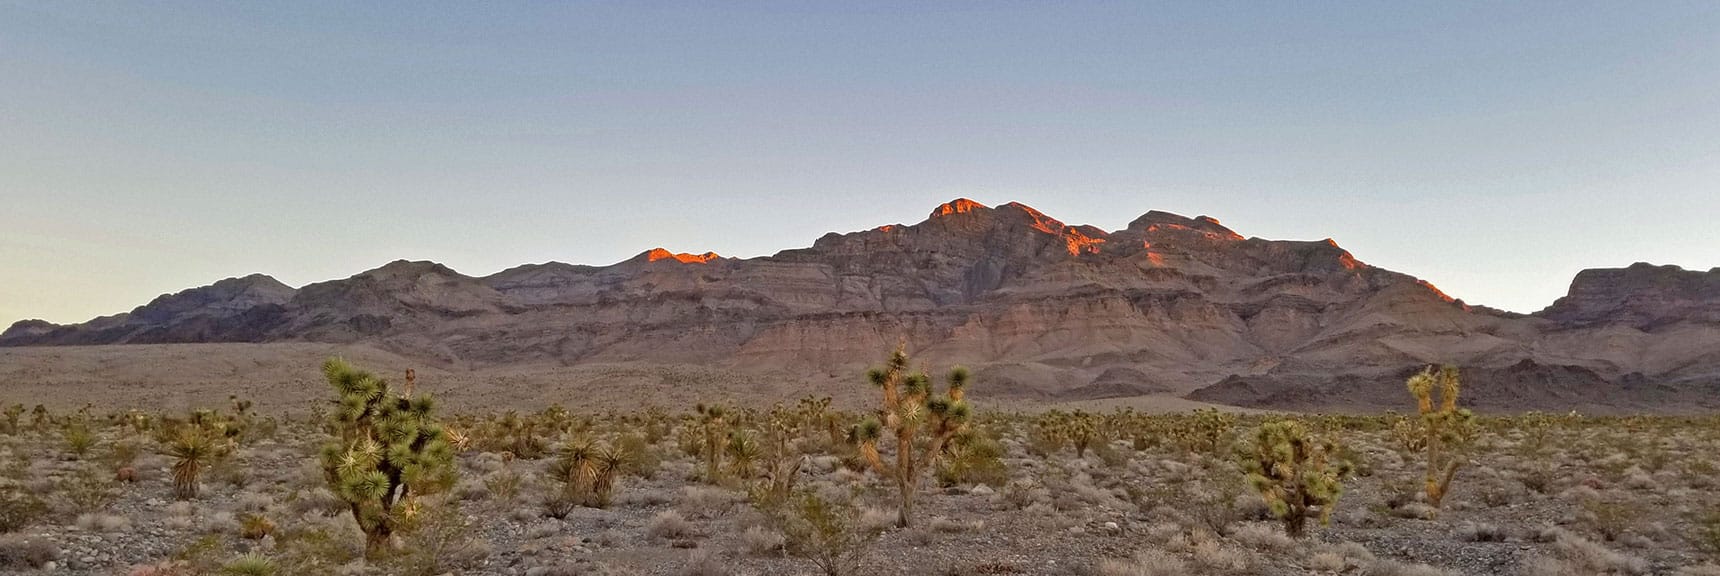 Rising Sun Lighting the Tips of the Sheep Range | Gass Peak Grand Crossing | Desert National Wildlife Refuge to Centennial Hills Las Vegas via Gass Peak Summit by Foot